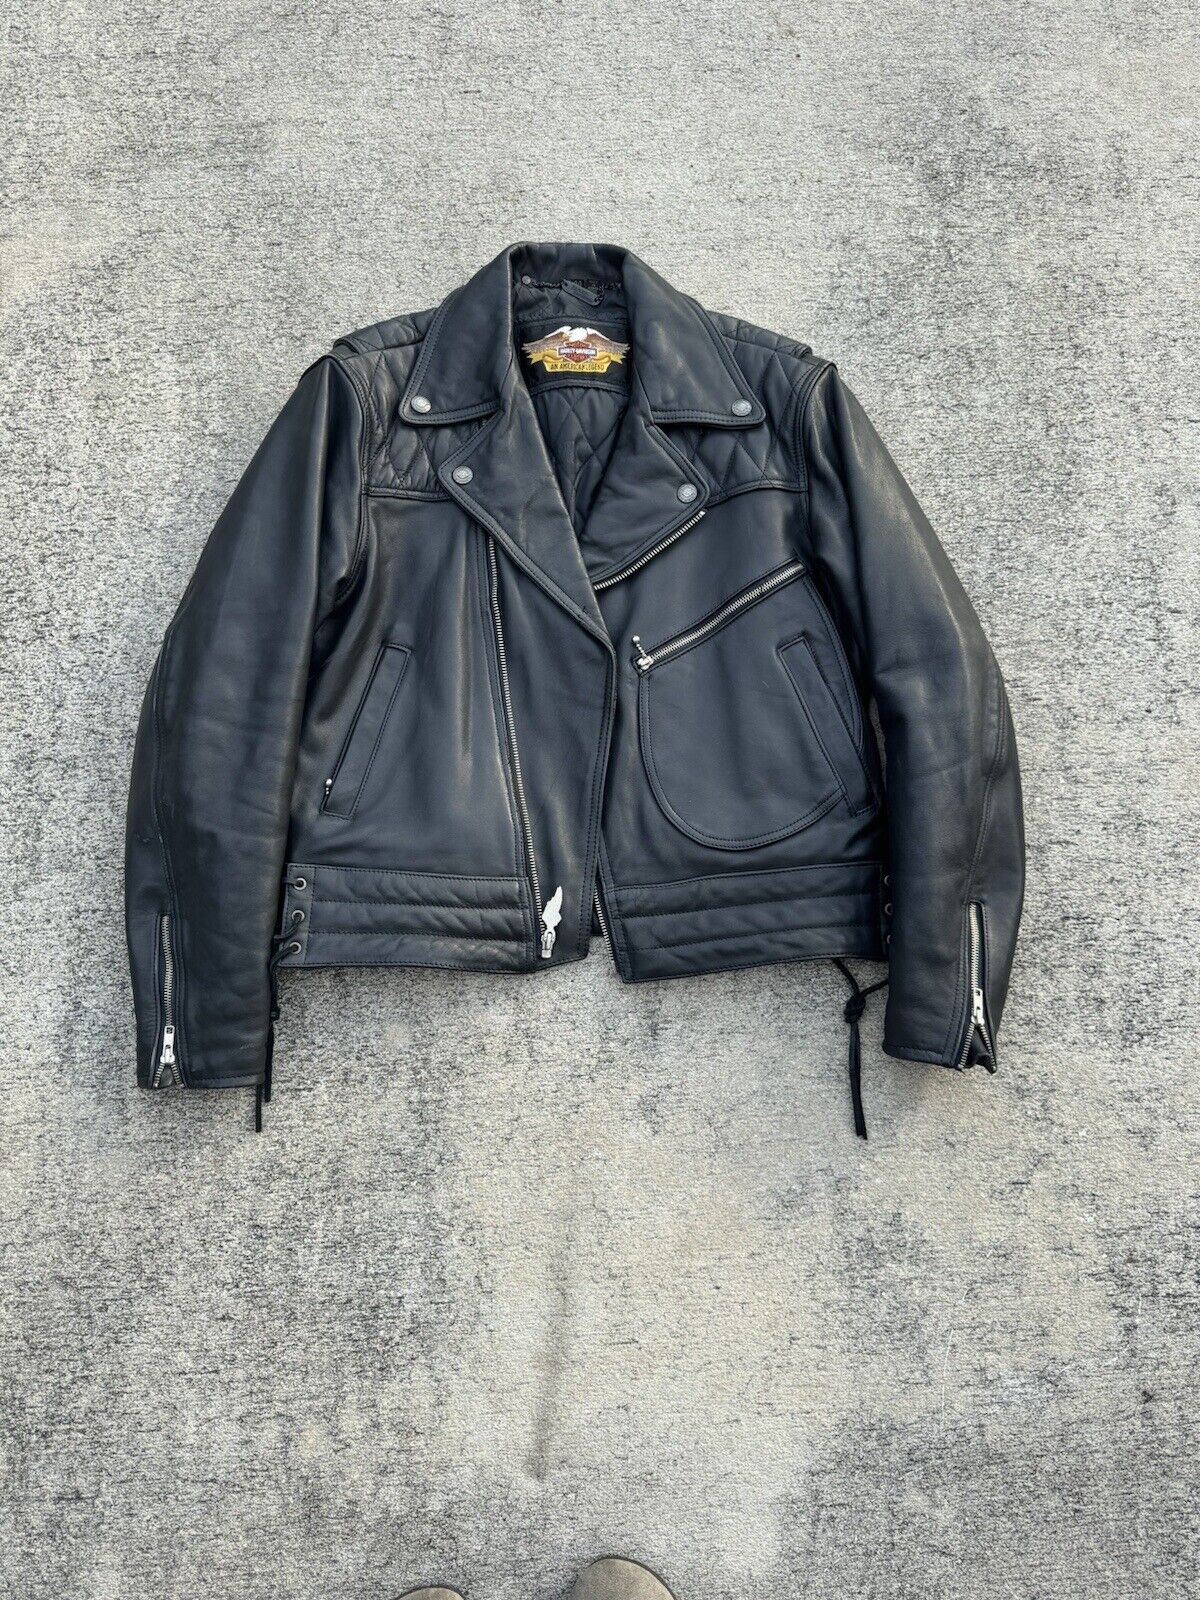 Vintage Harley Davidson Leather Jacket Sz L Mint Condition Nice Heavy Leather